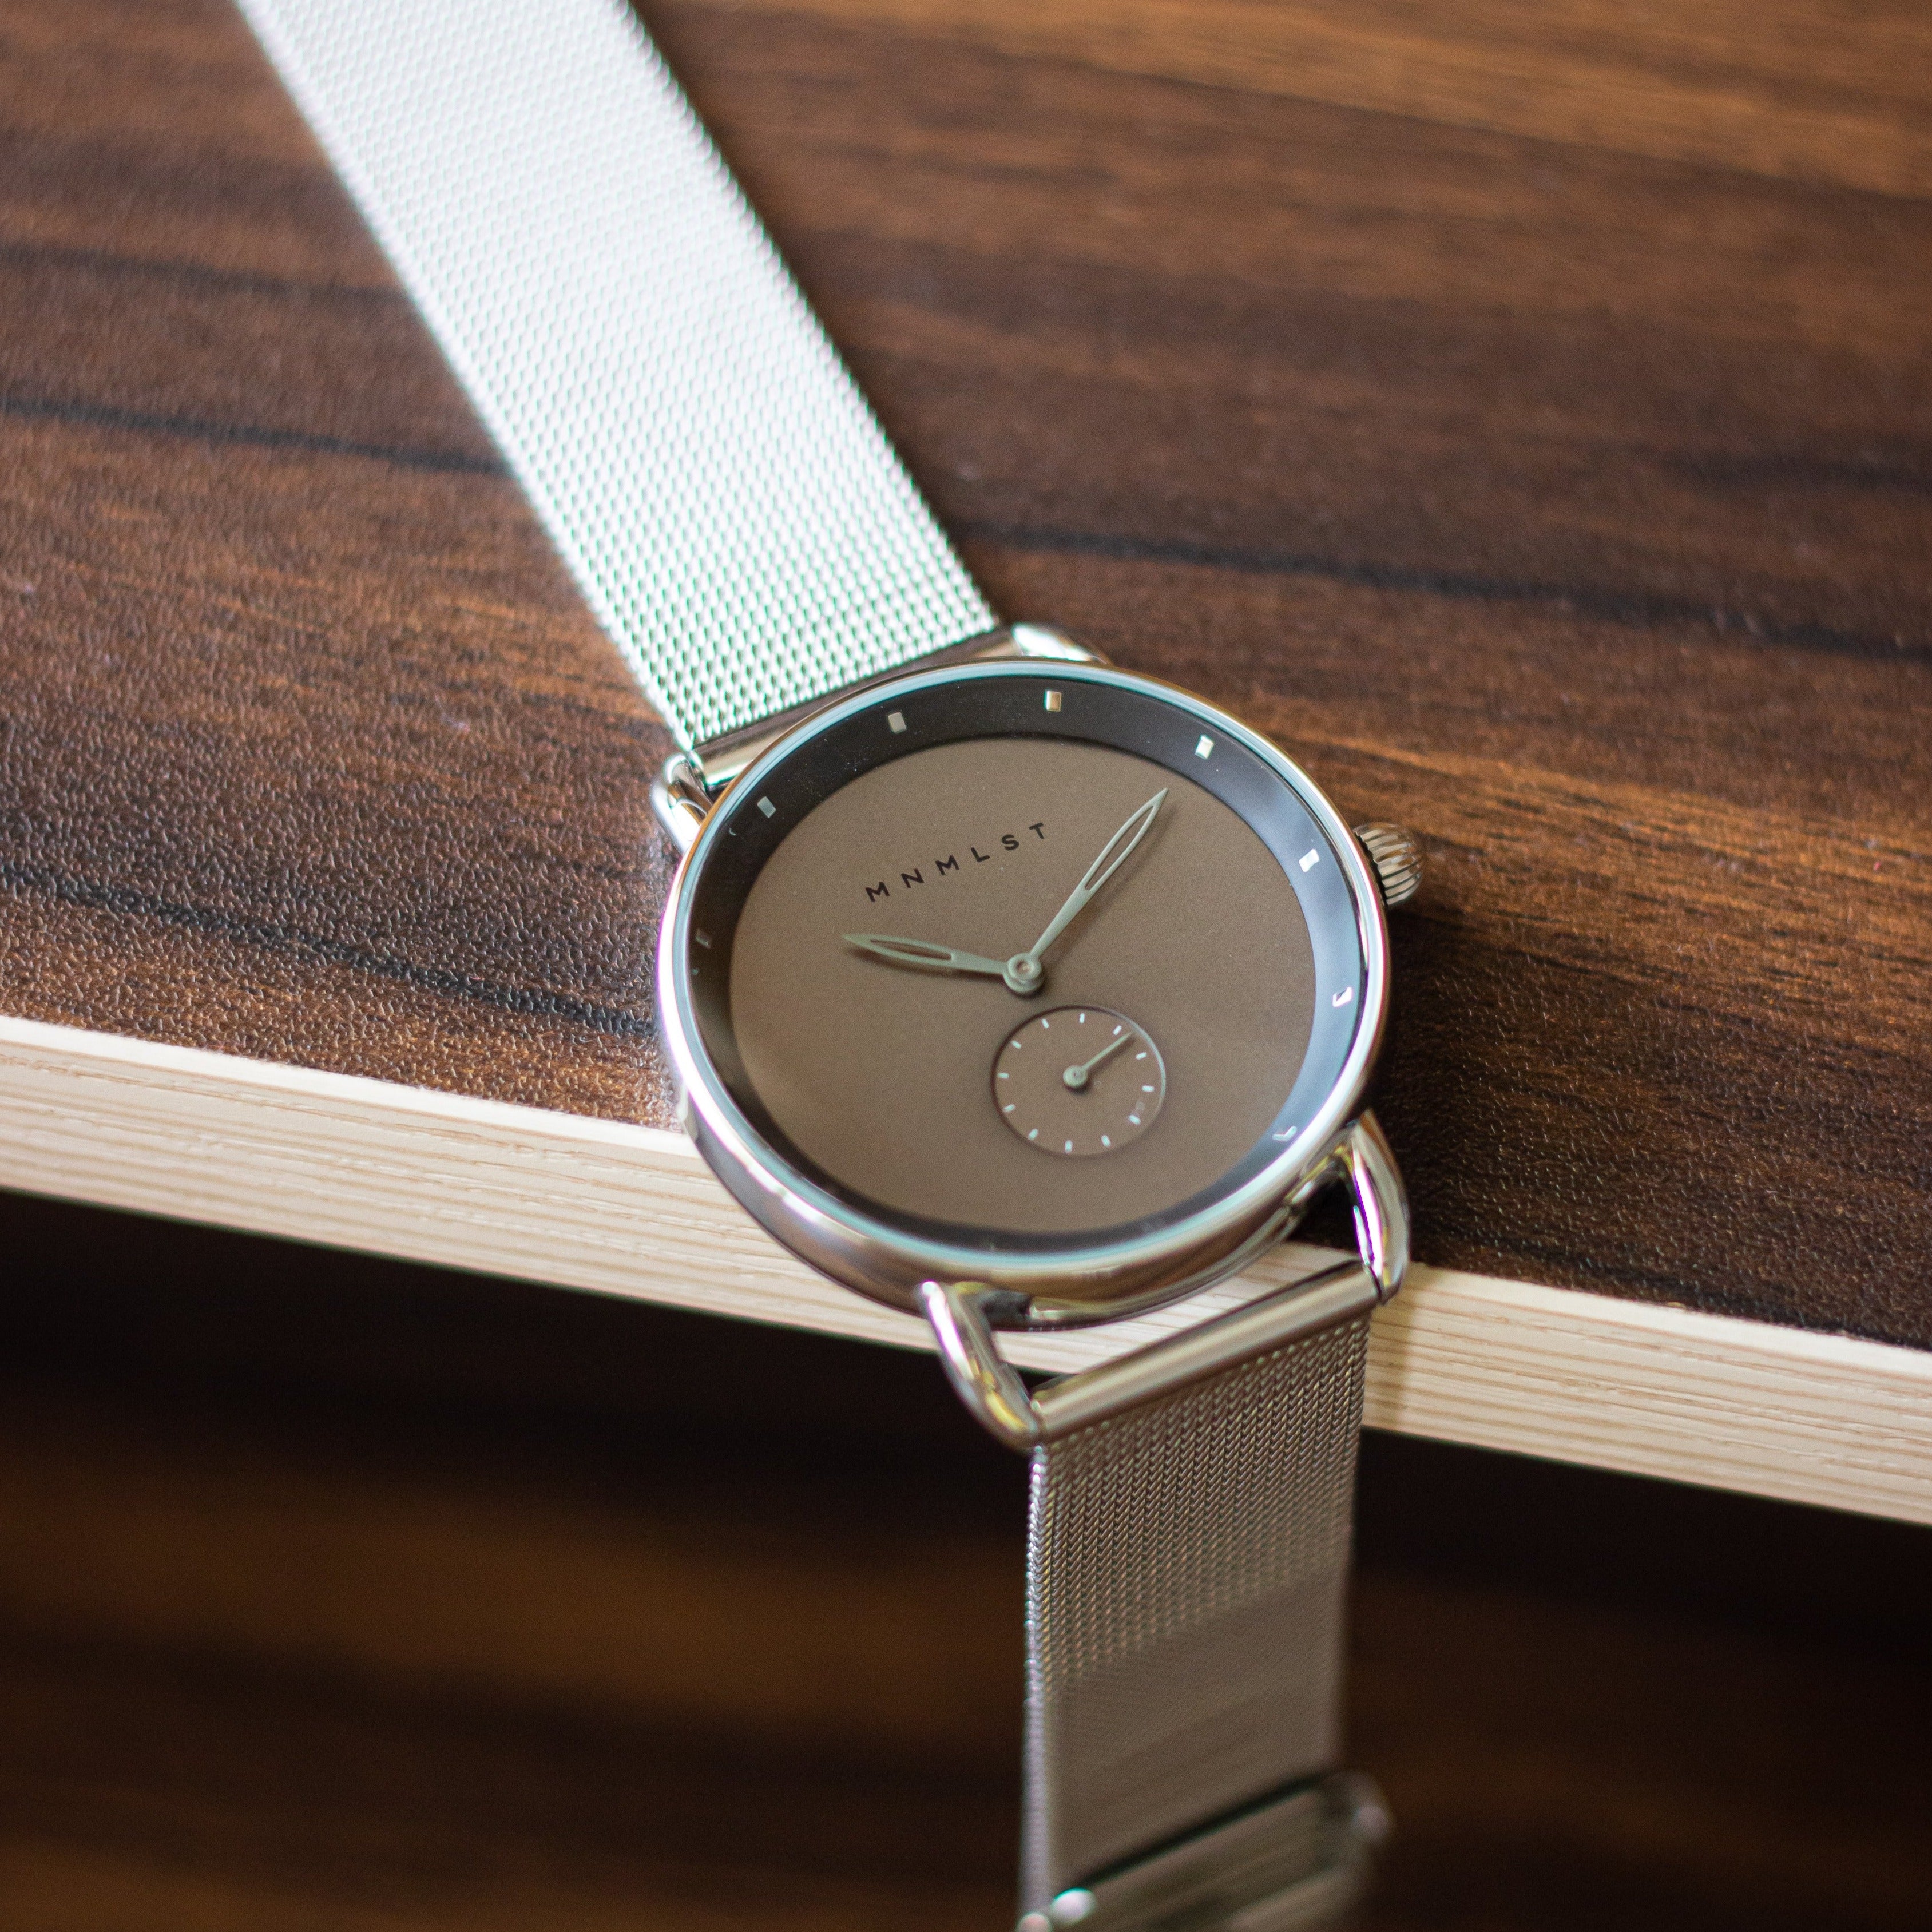 mnmlst watches by Mnmlst Watch Co. — Kickstarter